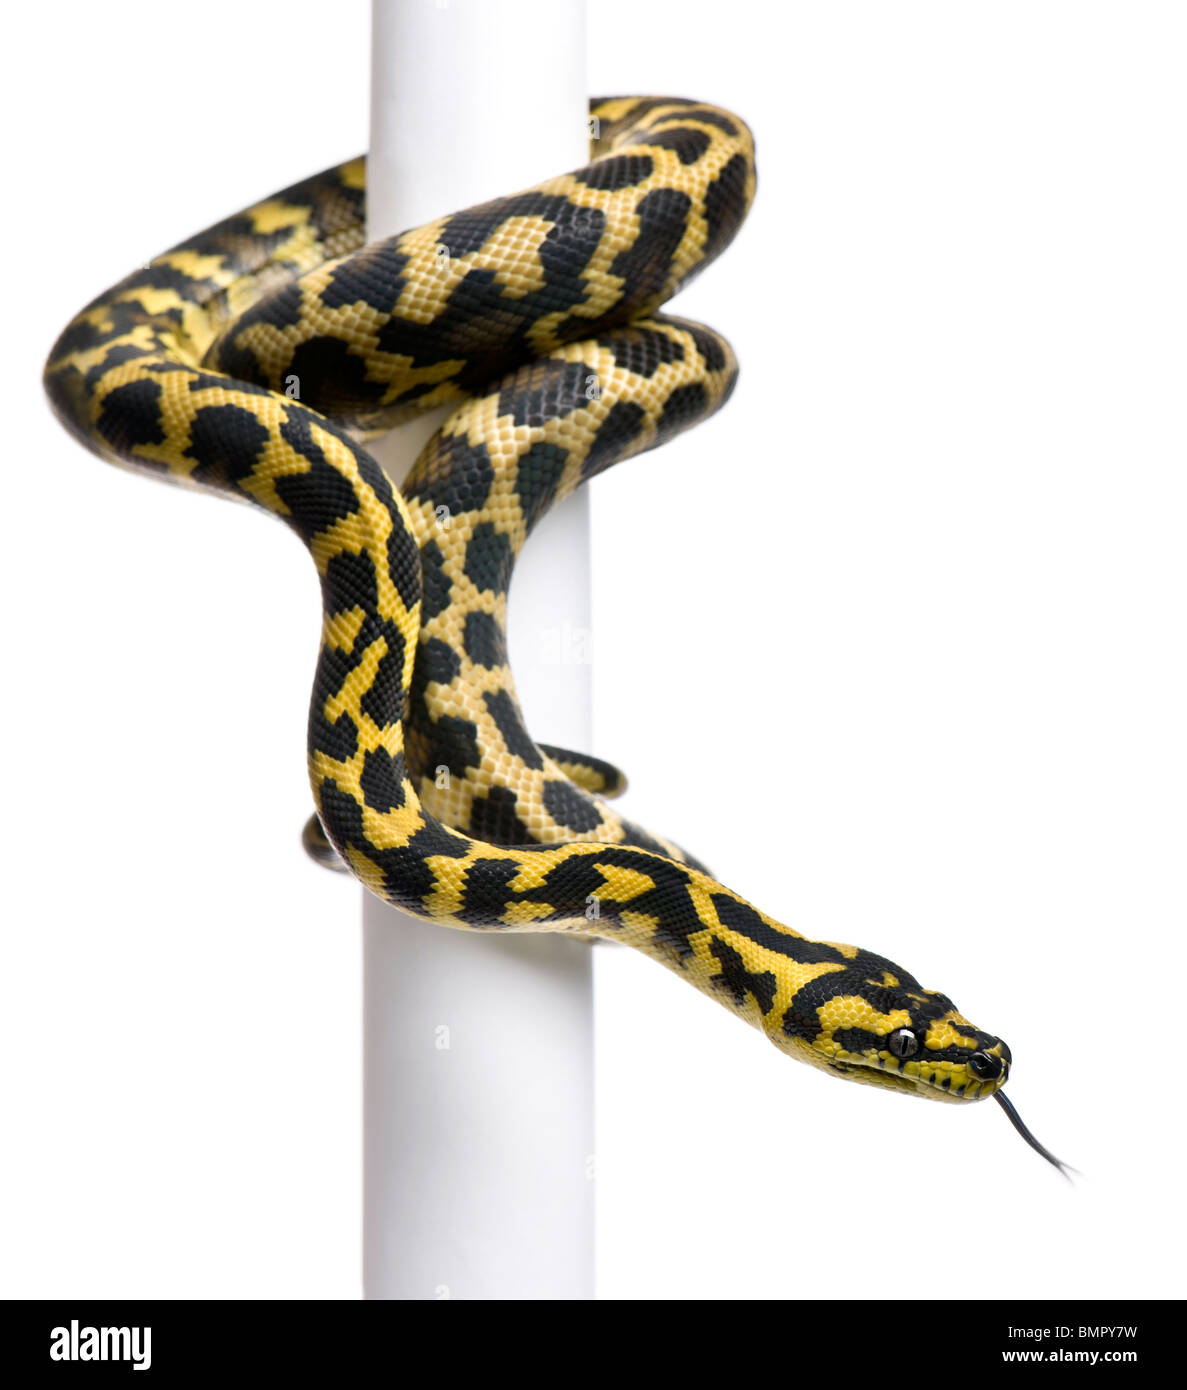 Morelia spilota variegata snake, 1 year old, slithering around pole in front of white background Stock Photo